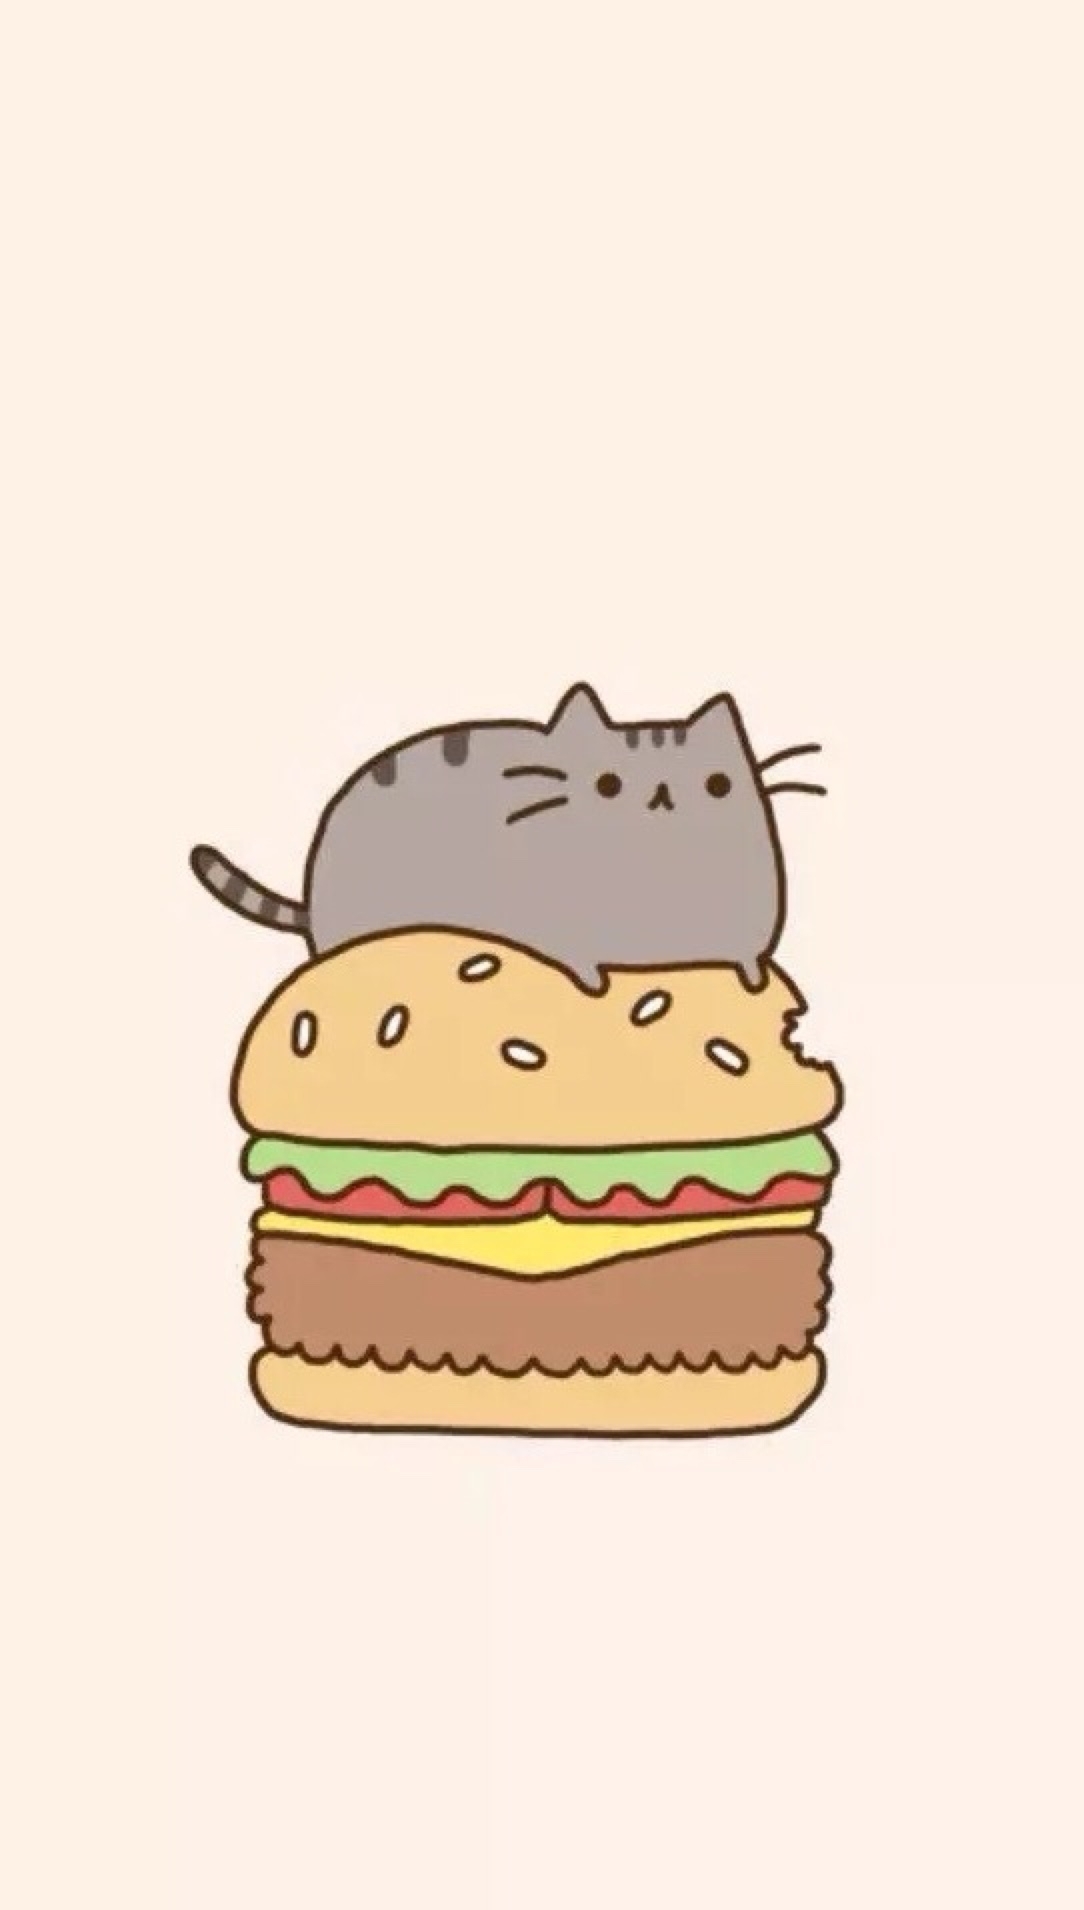 pusheen wallpaper,cheeseburger,cartoon,fast food,hamburger,food